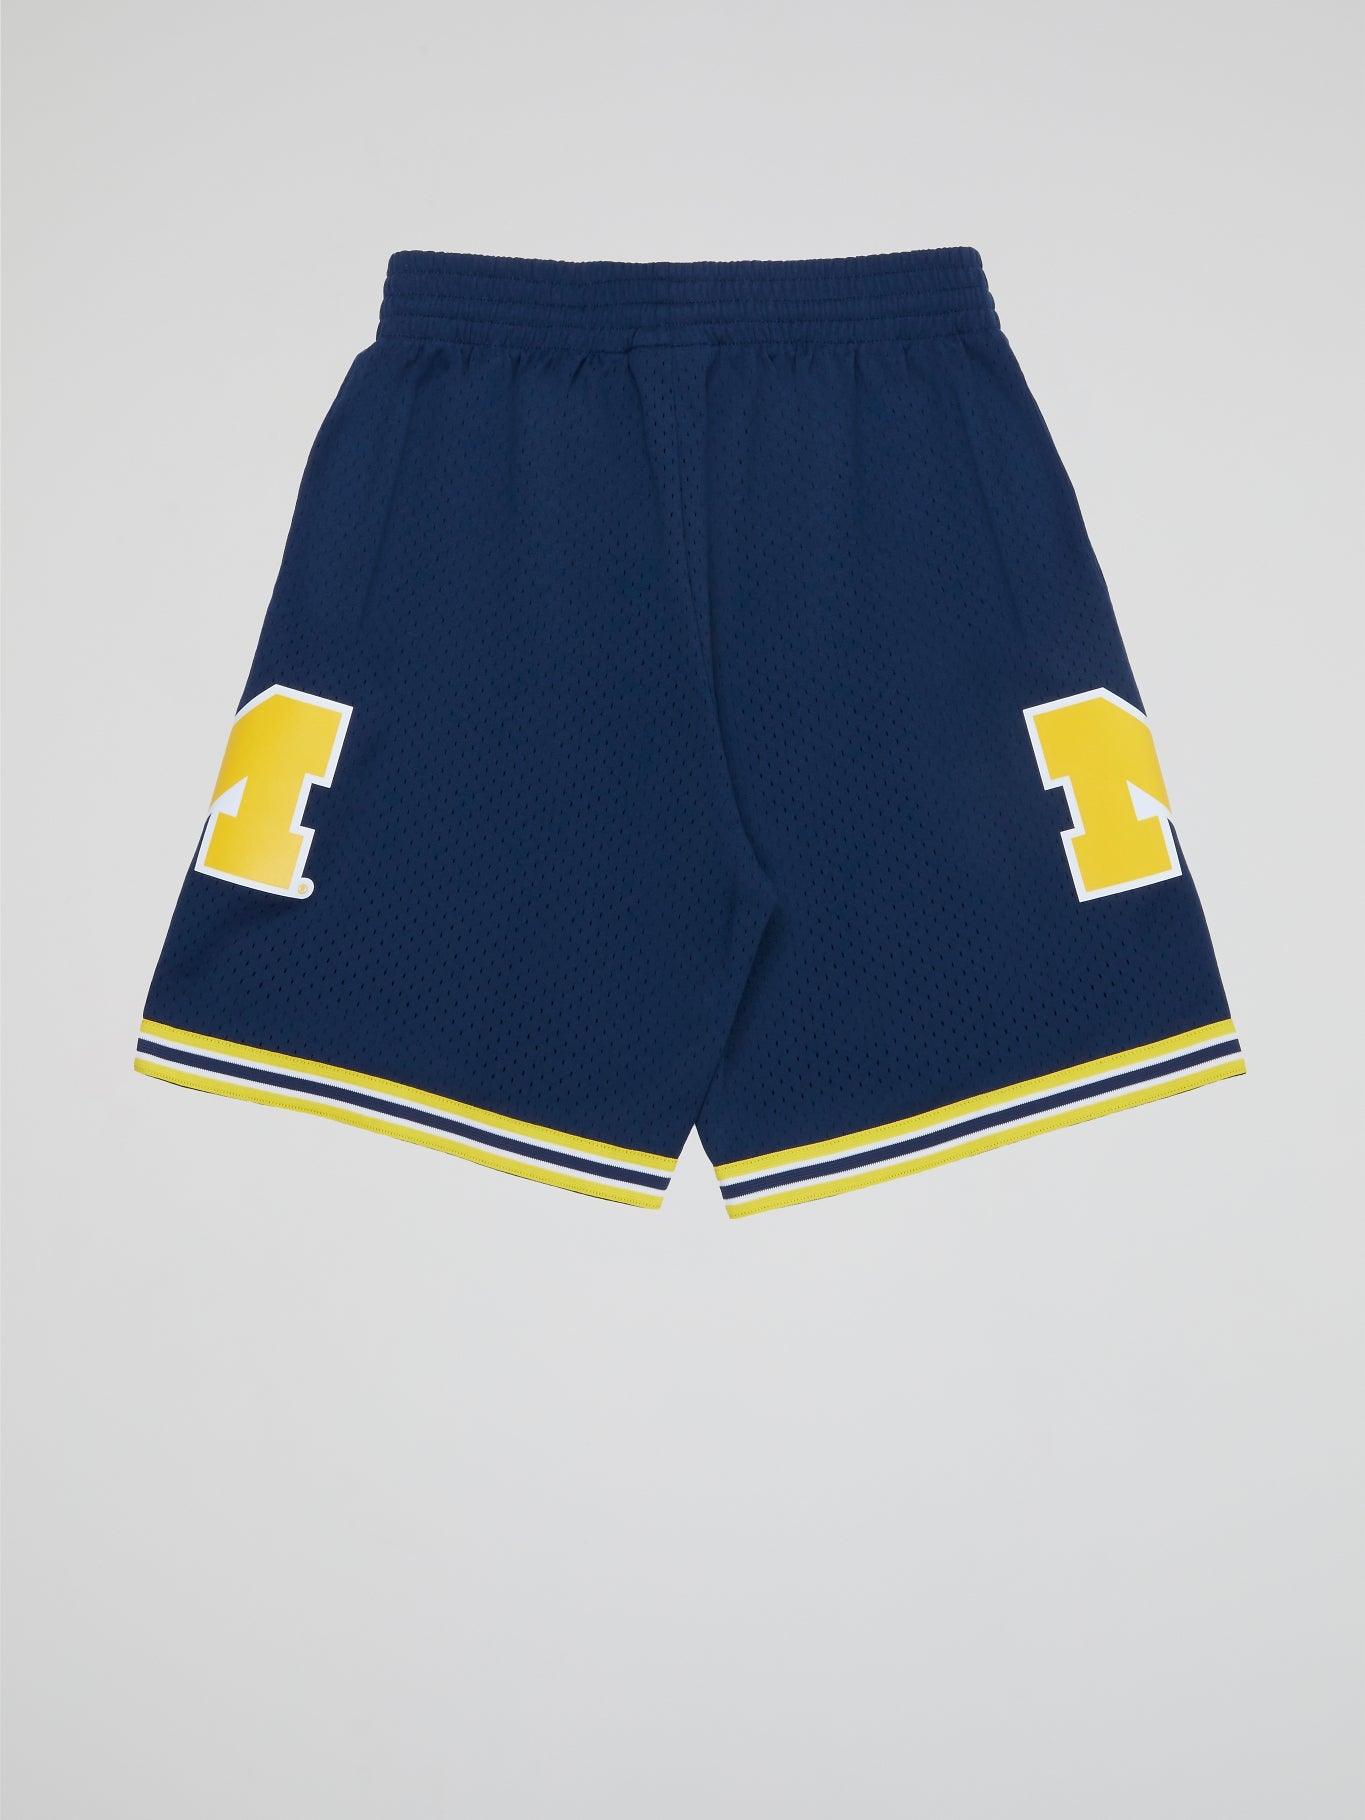 NCAA Road Shorts Michigan 1991 - B-Hype Society